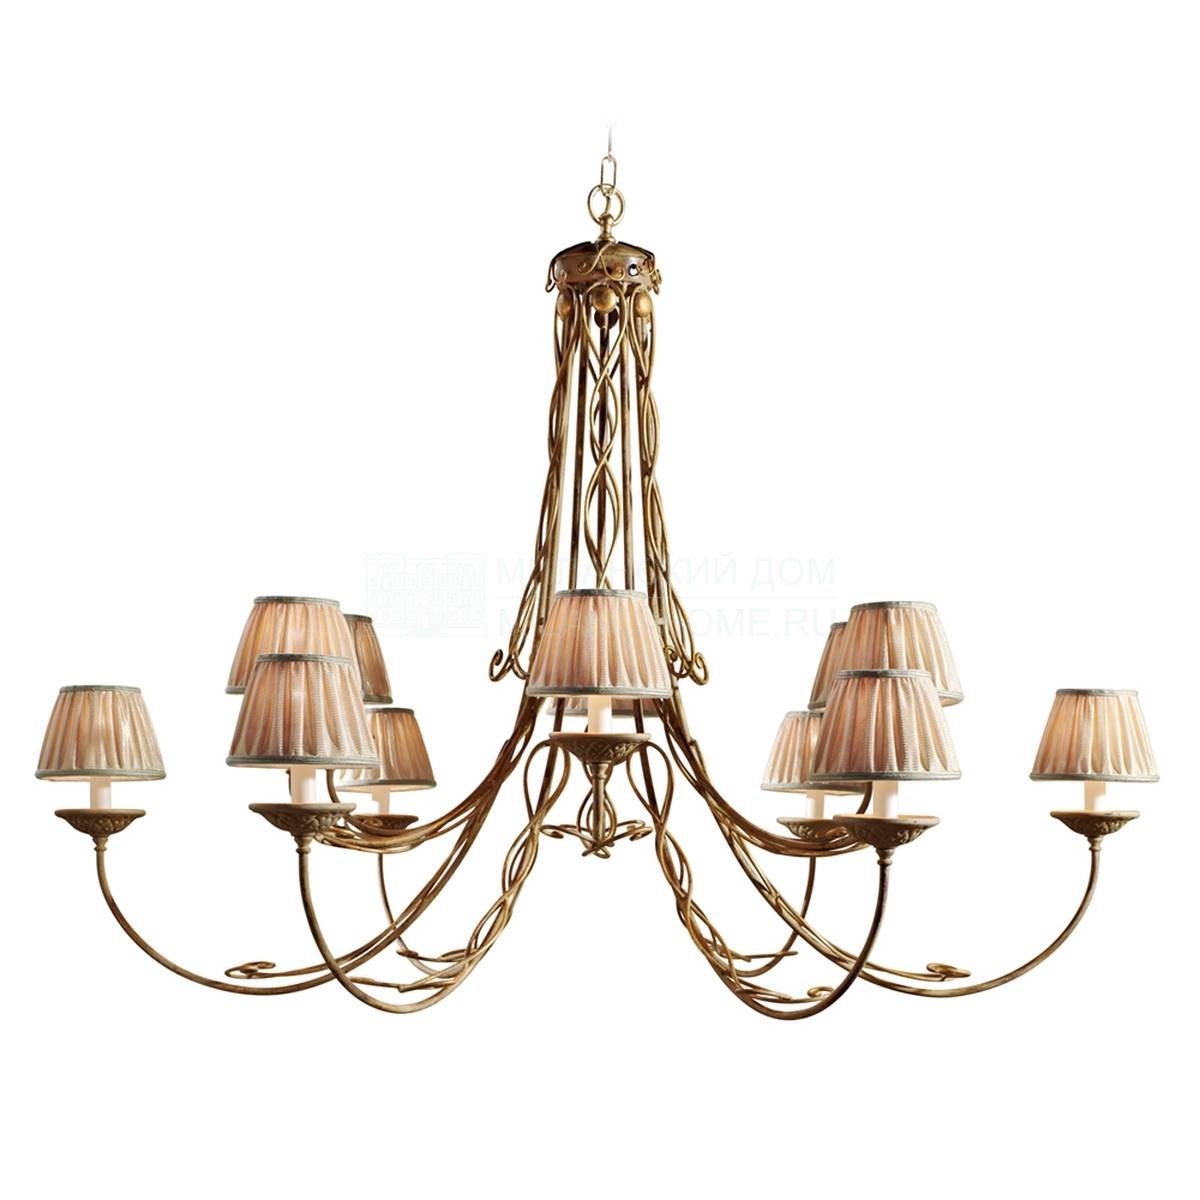 Люстра Soft chandelier twelve lights из Италии фабрики MARIONI